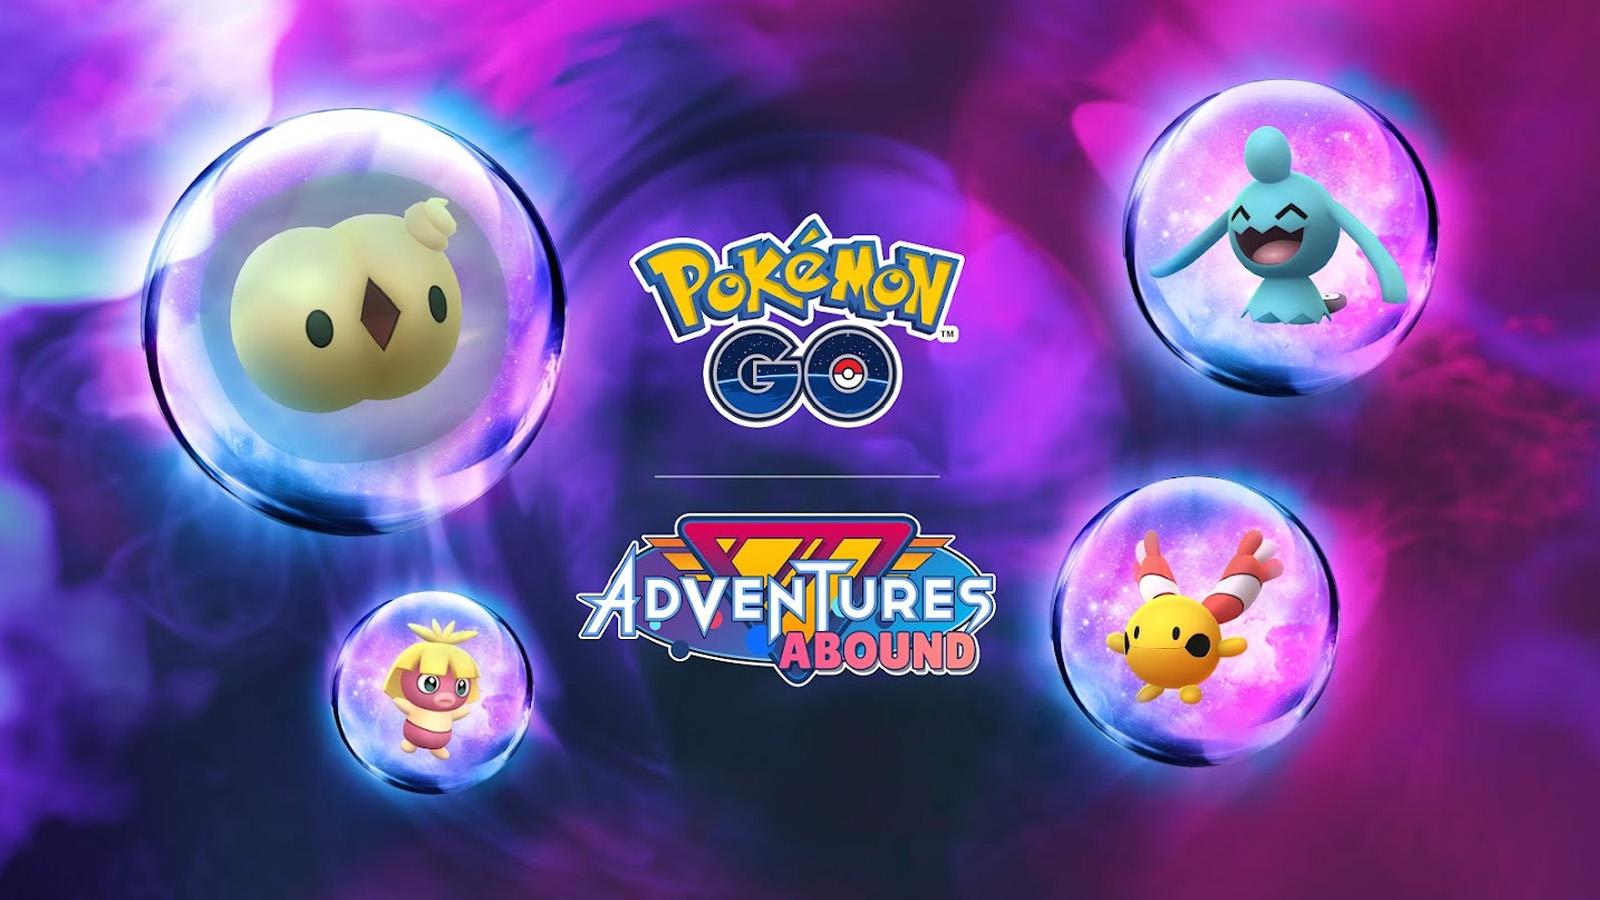 Niantic reveals new info about 'Pokemon Go' Buddy Adventure